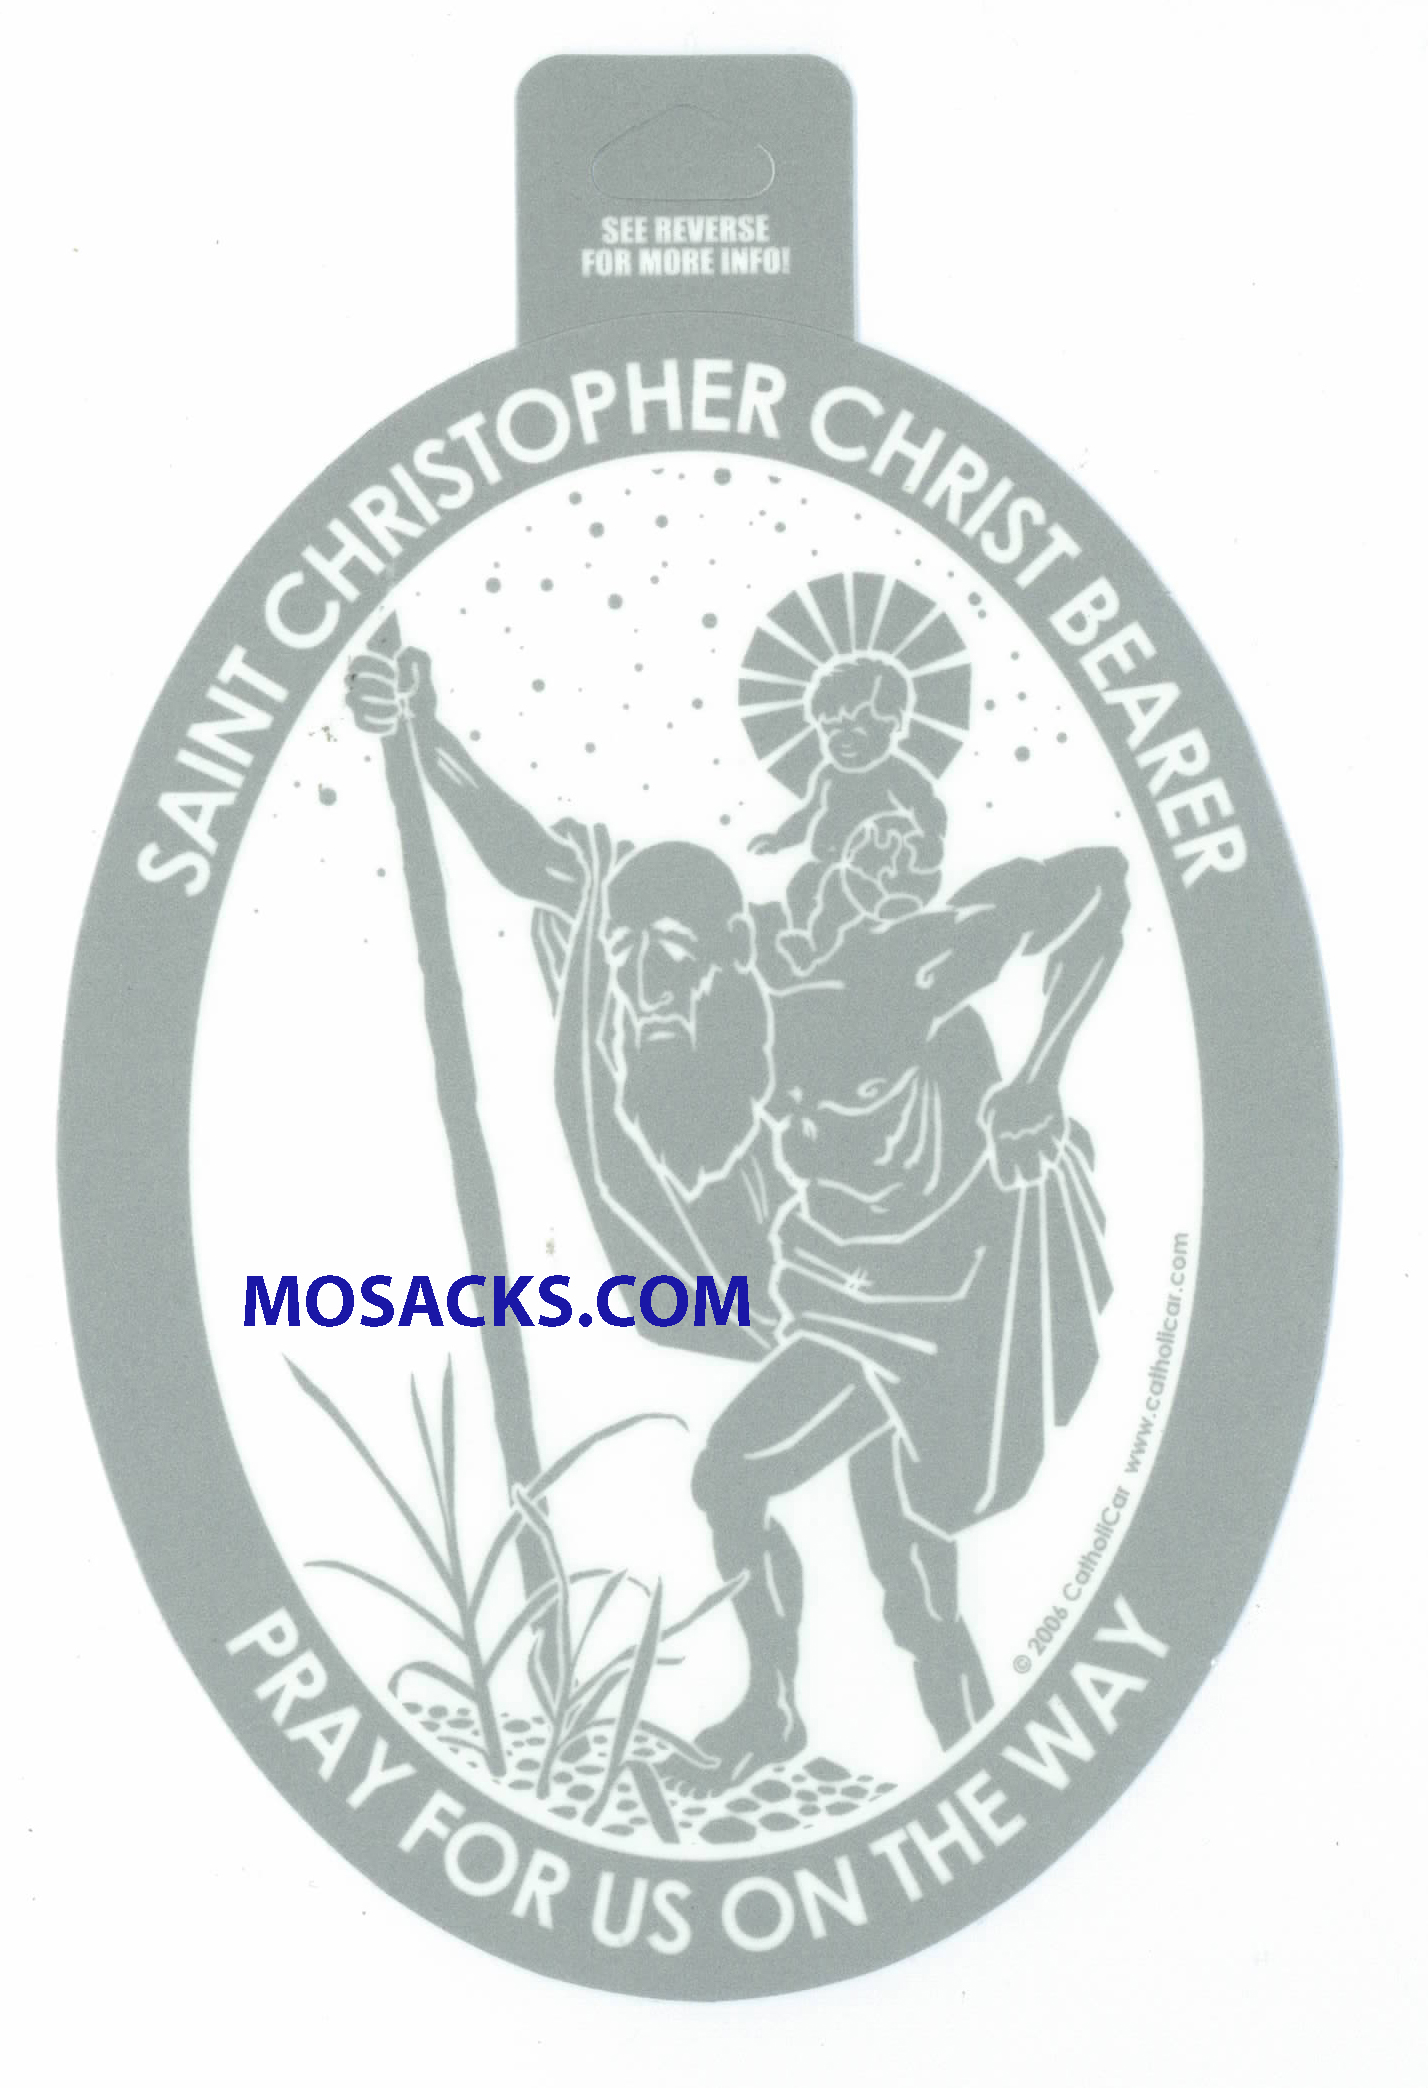 Saint Christopher Oval Decal Christian Decal, Catholic Decal